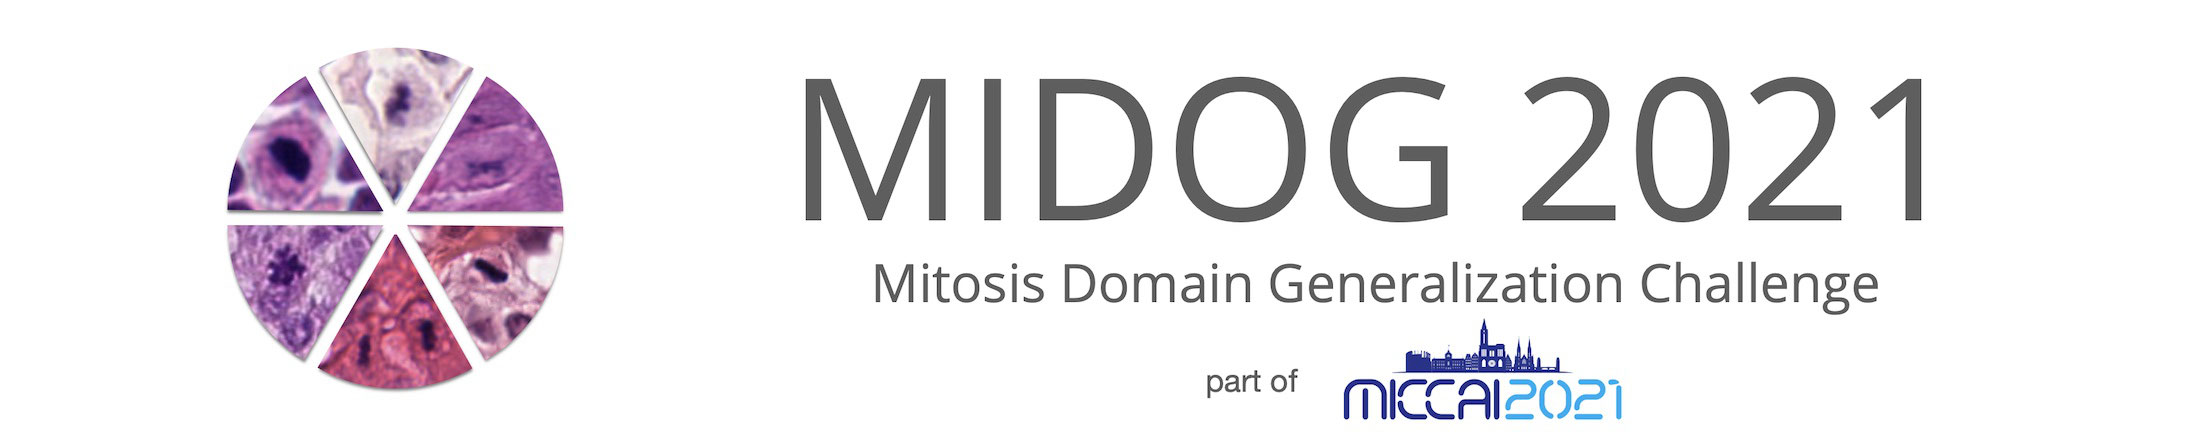 MIDOG Challenge 2021 Banner